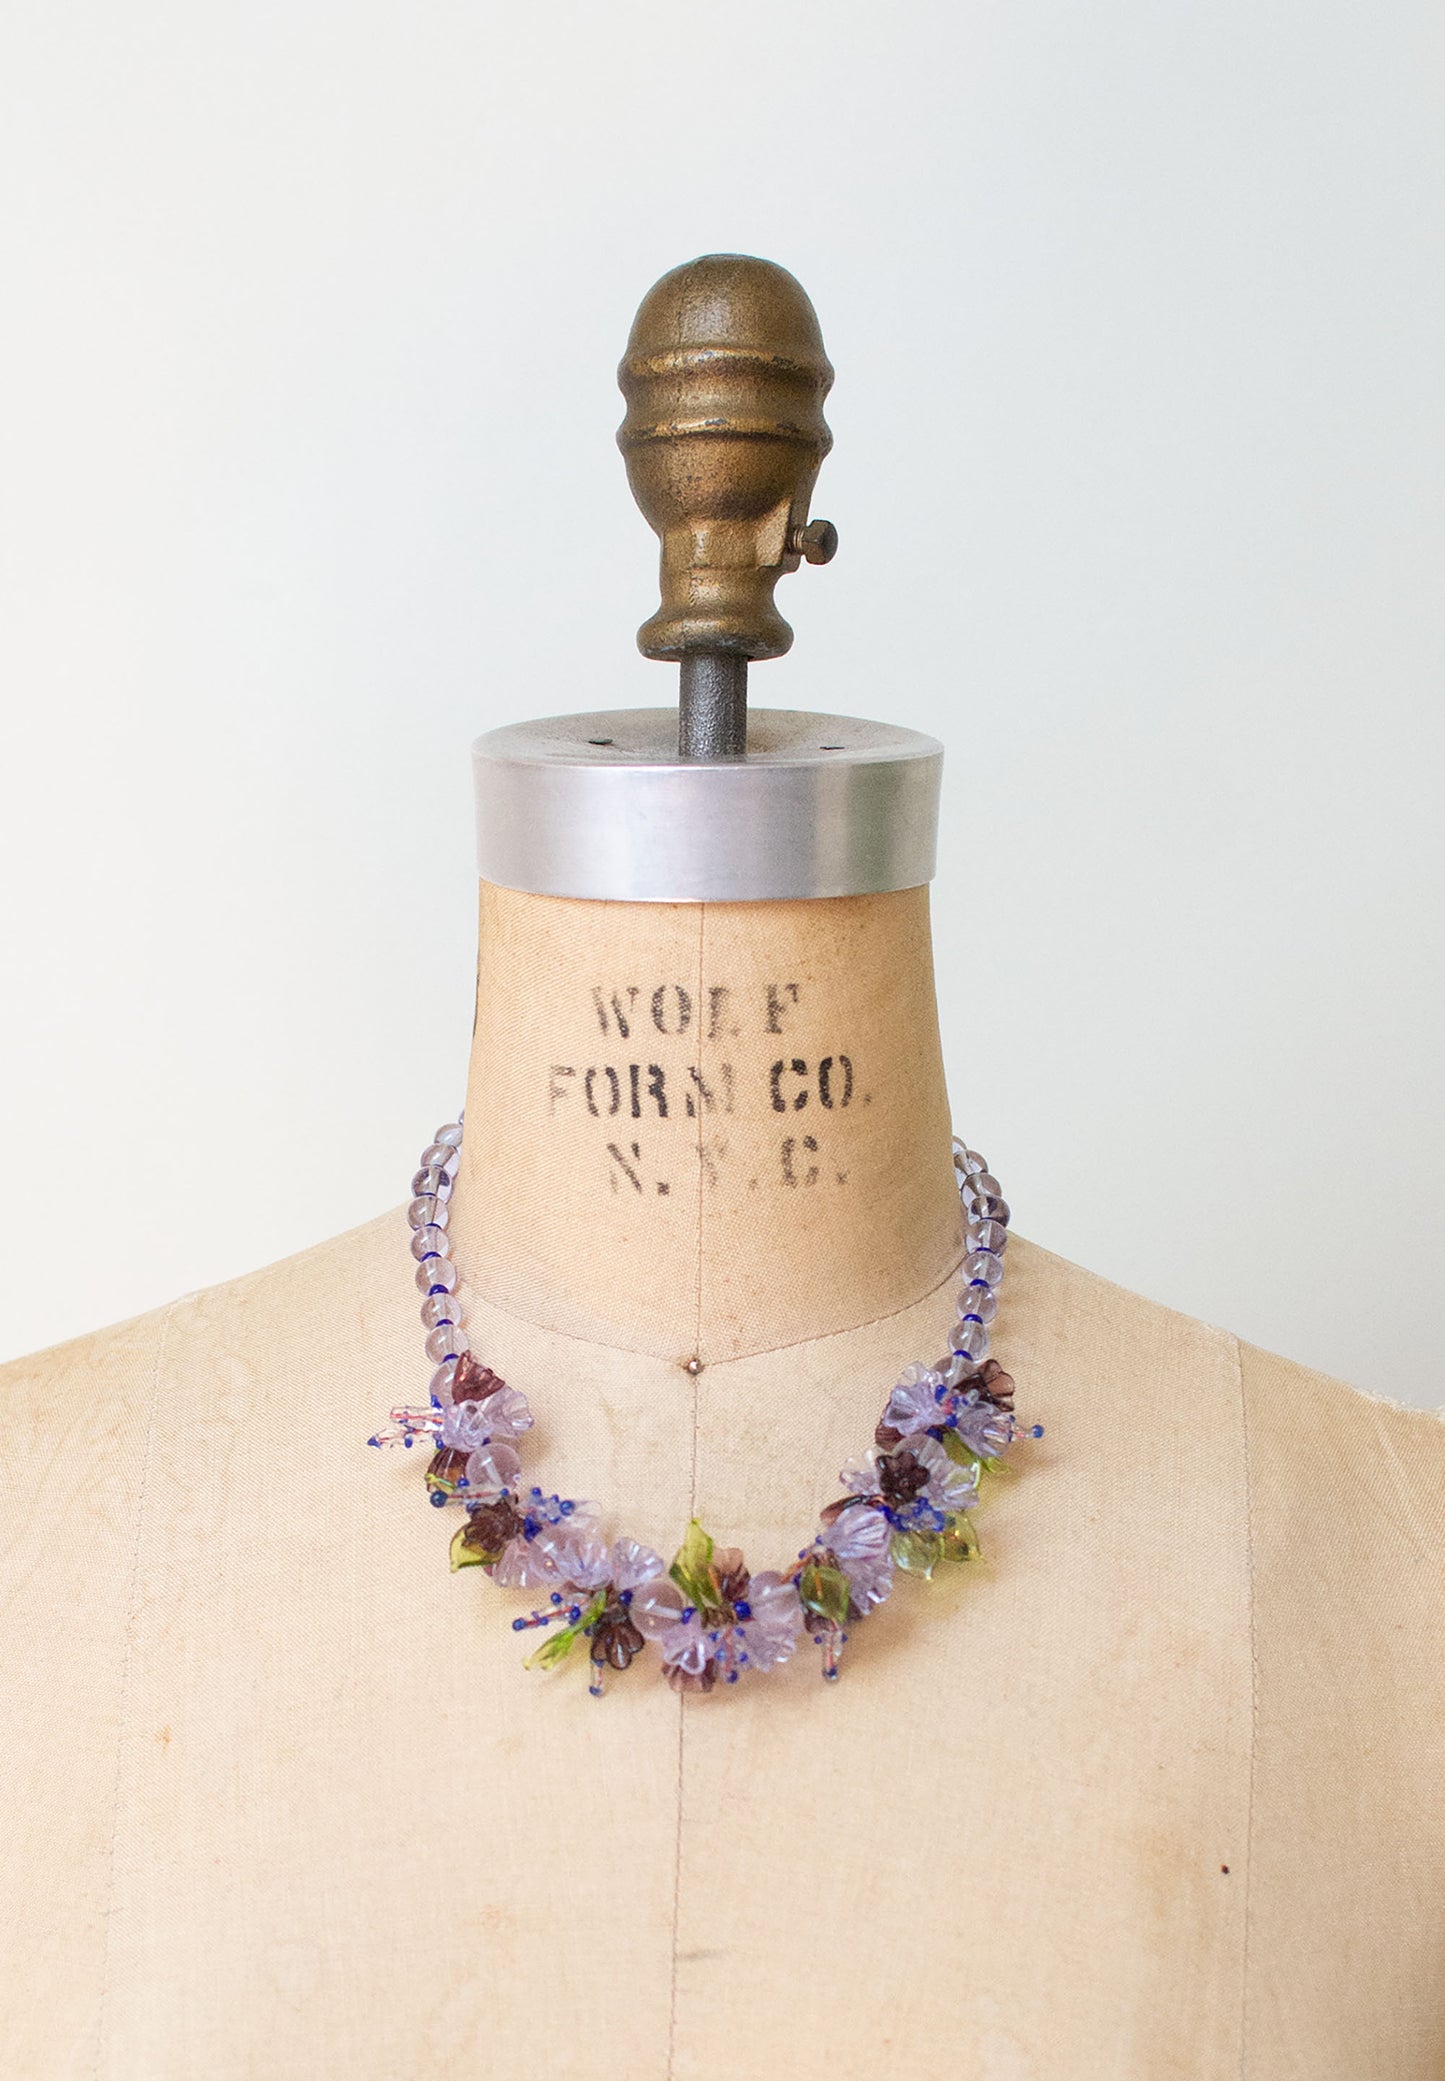 Vintage Venetian Glass Flower Garland Necklace